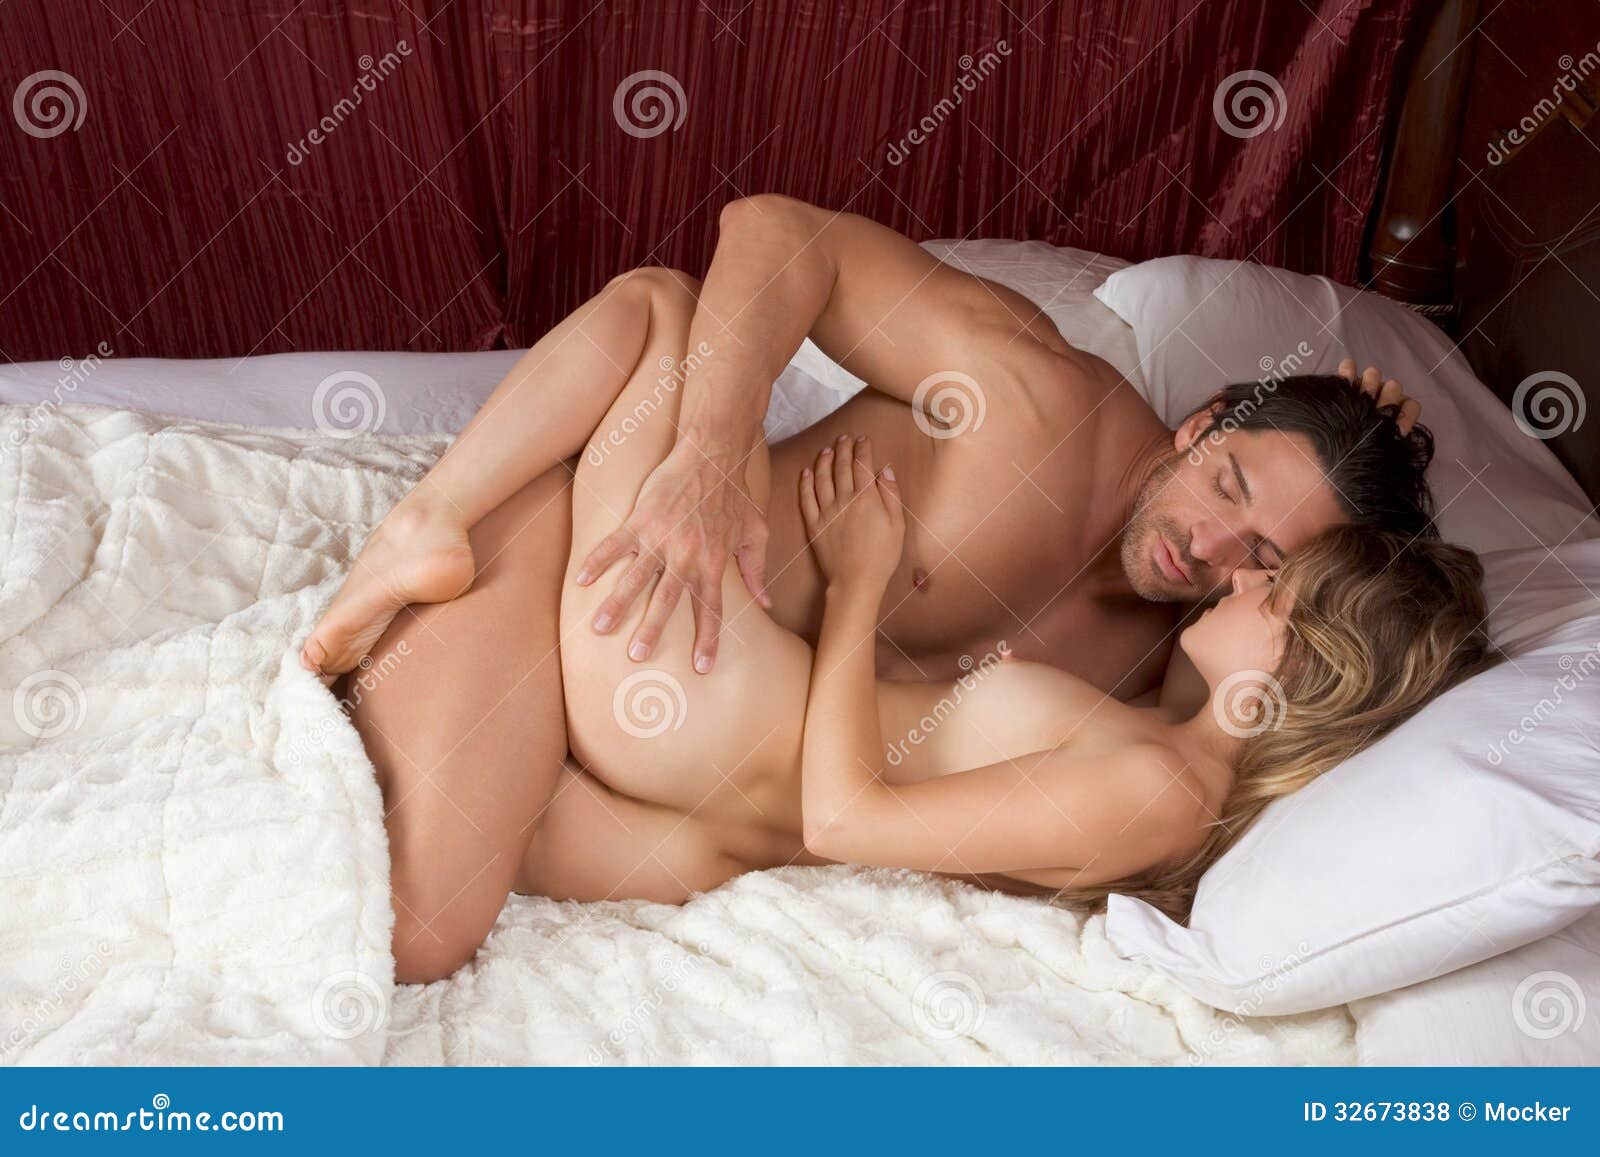 arsenio uy share sexy naked couples having sex photos